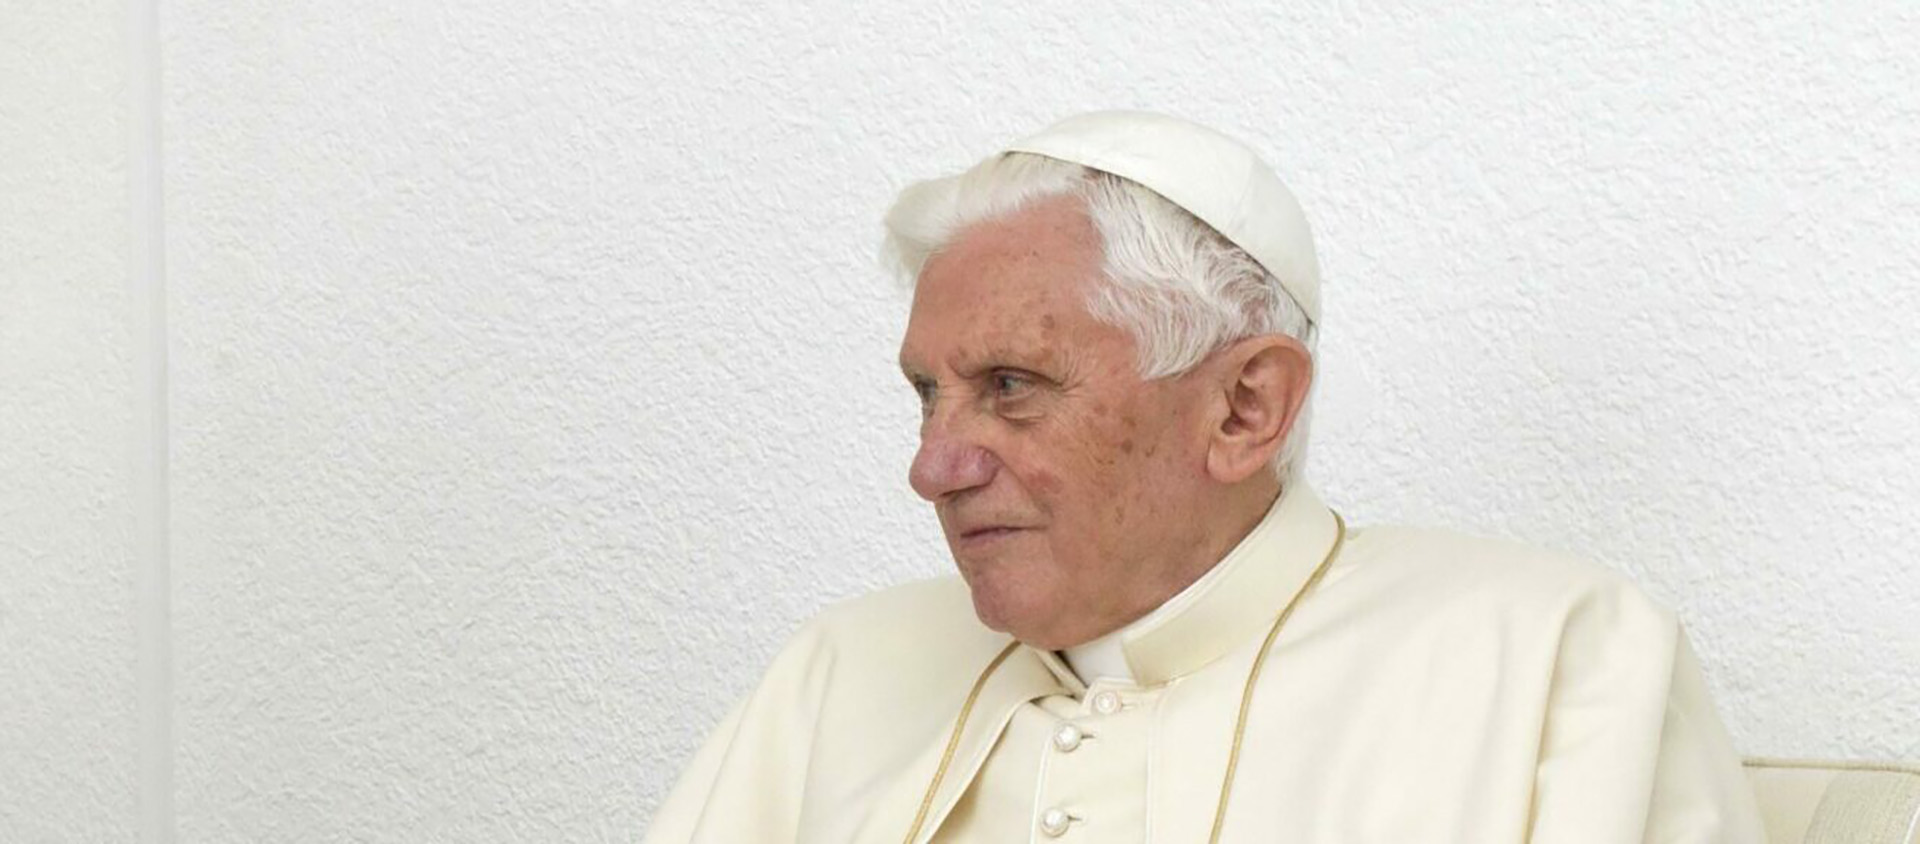 Andrea Tornielli a vigoureusement défendu le pape émérîte Benoît XVI | © Landesregierung Baden-Würtemberg/Flickr/CC BY-NC-ND 2.0